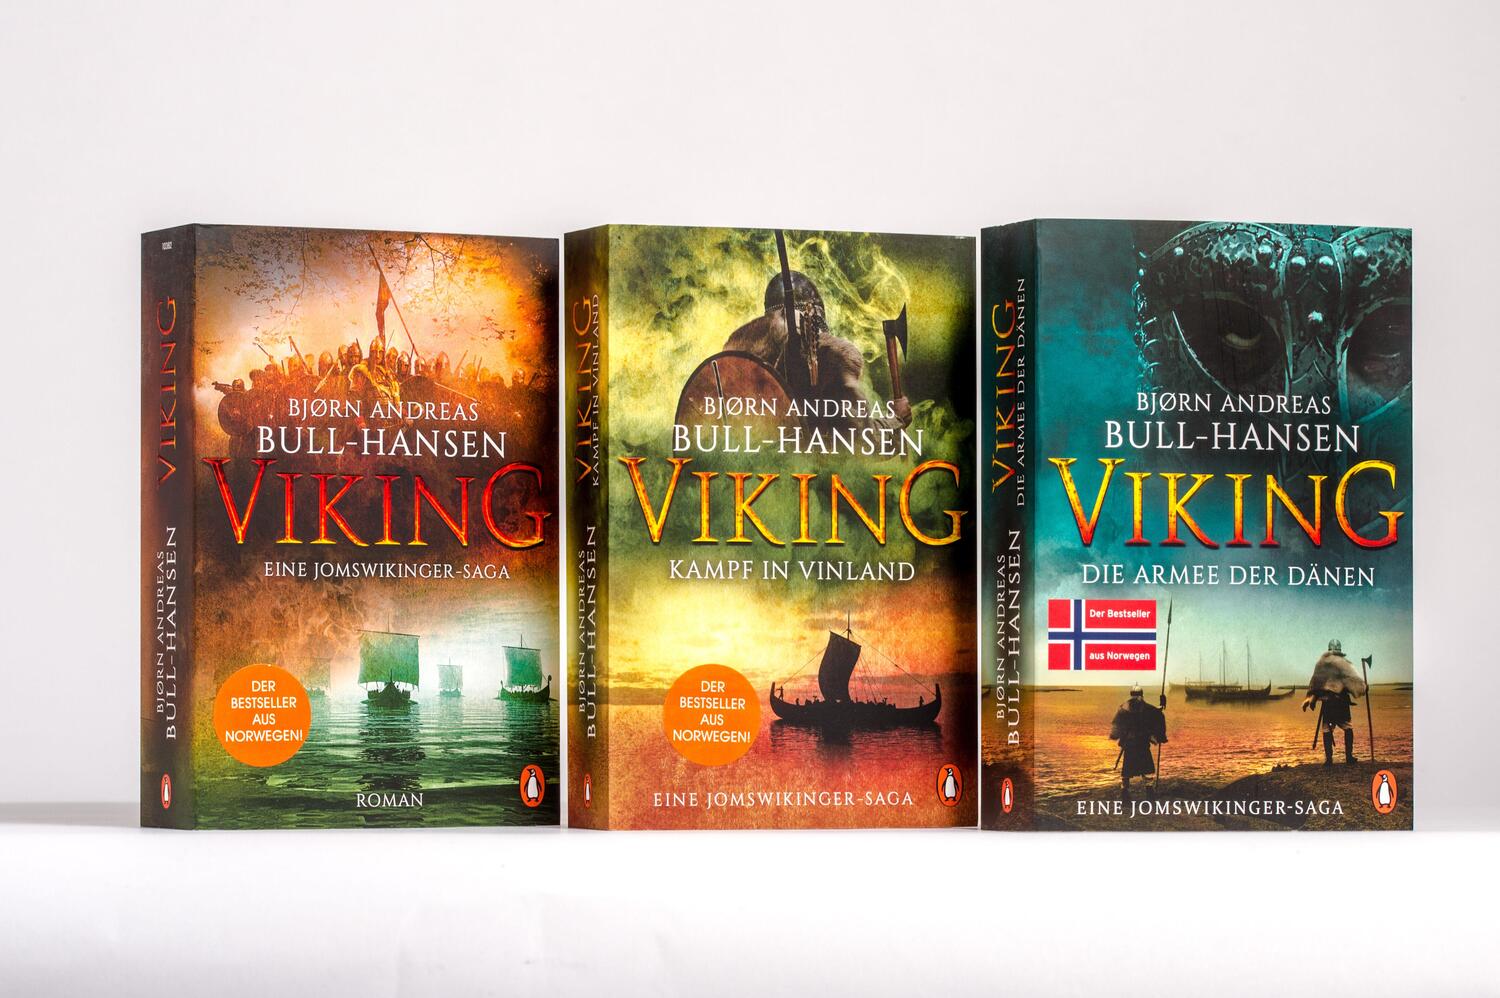 Bild: 9783328103820 | VIKING | Roman - Der Bestseller aus Norwegen | Bull-Hansen | Buch